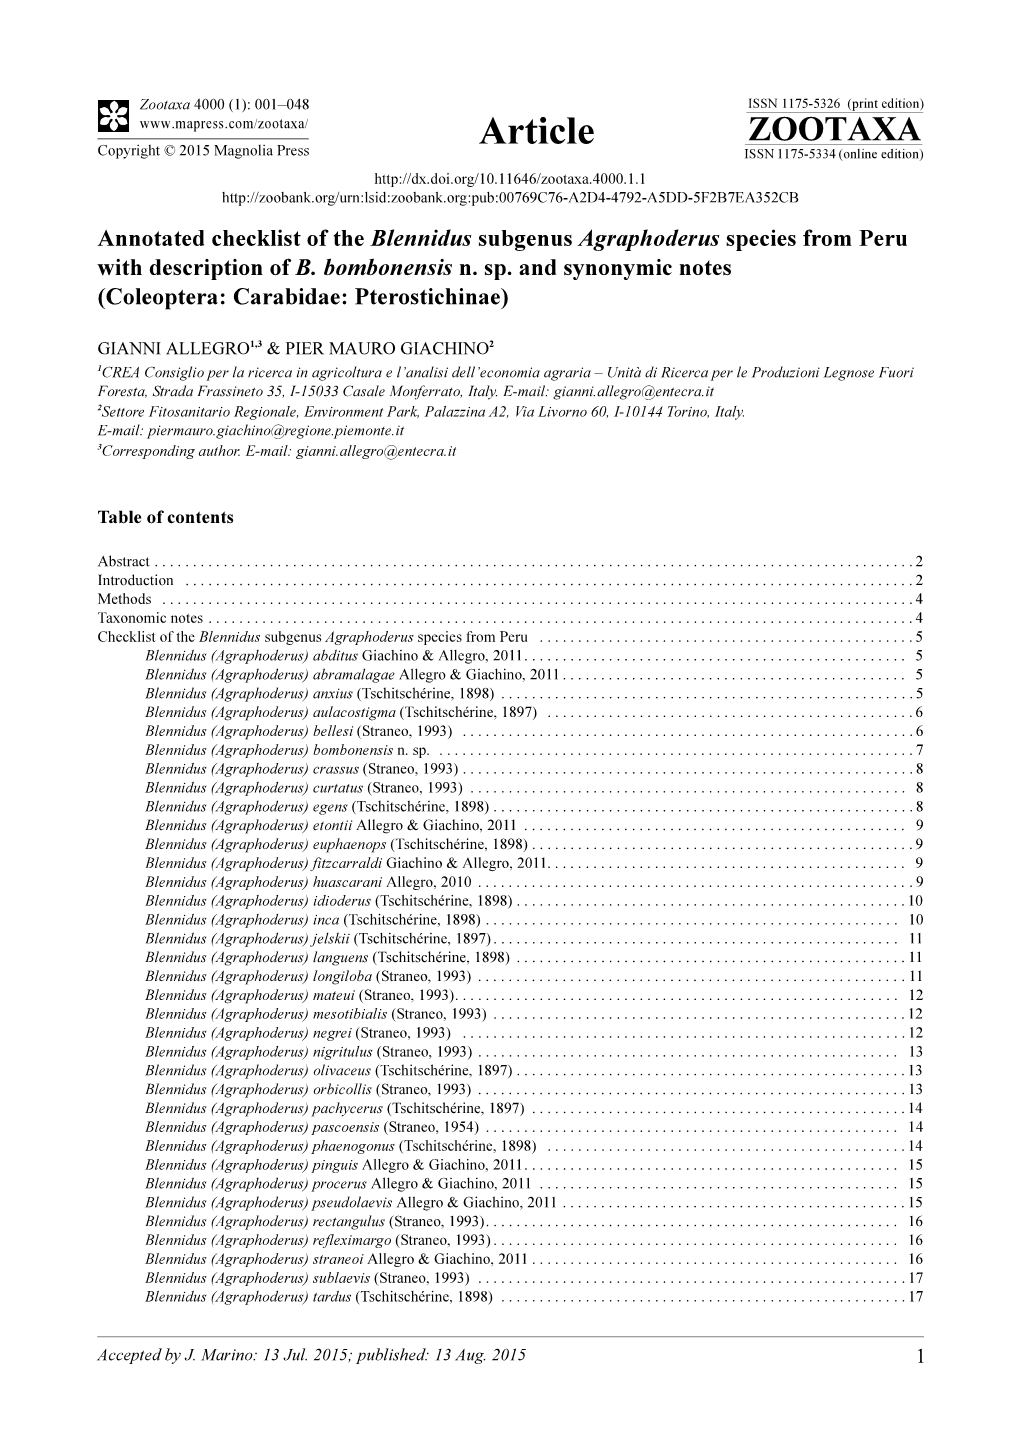 Annotated Checklist of the Blennidus Subgenus Agraphoderus Species from Peru with Description of B